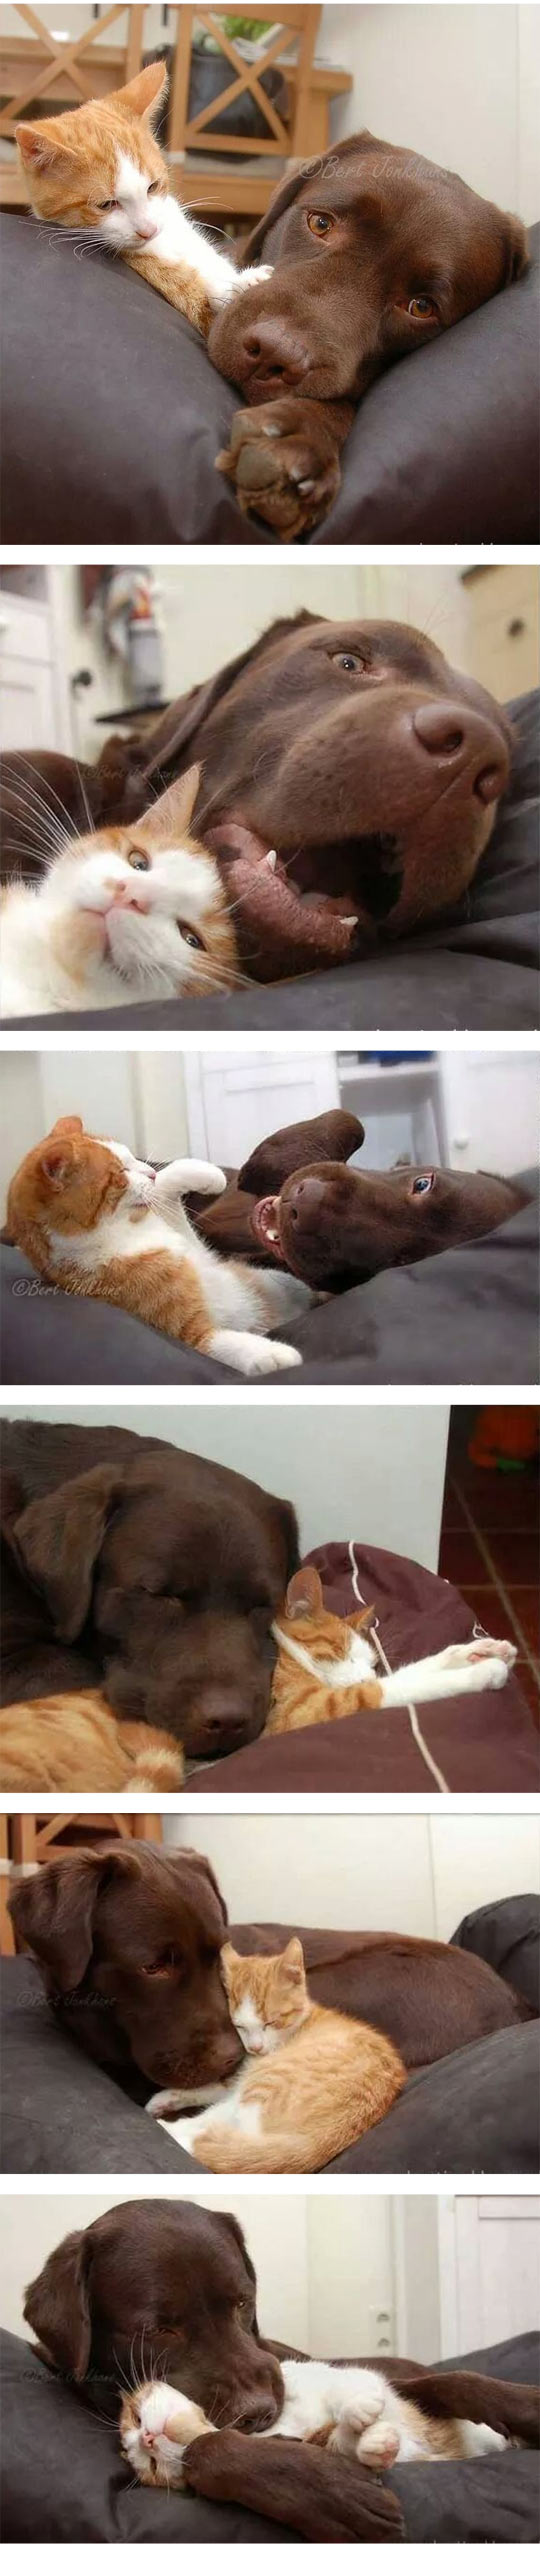 funny-dog-cat-love-hug-sleeping-kitten